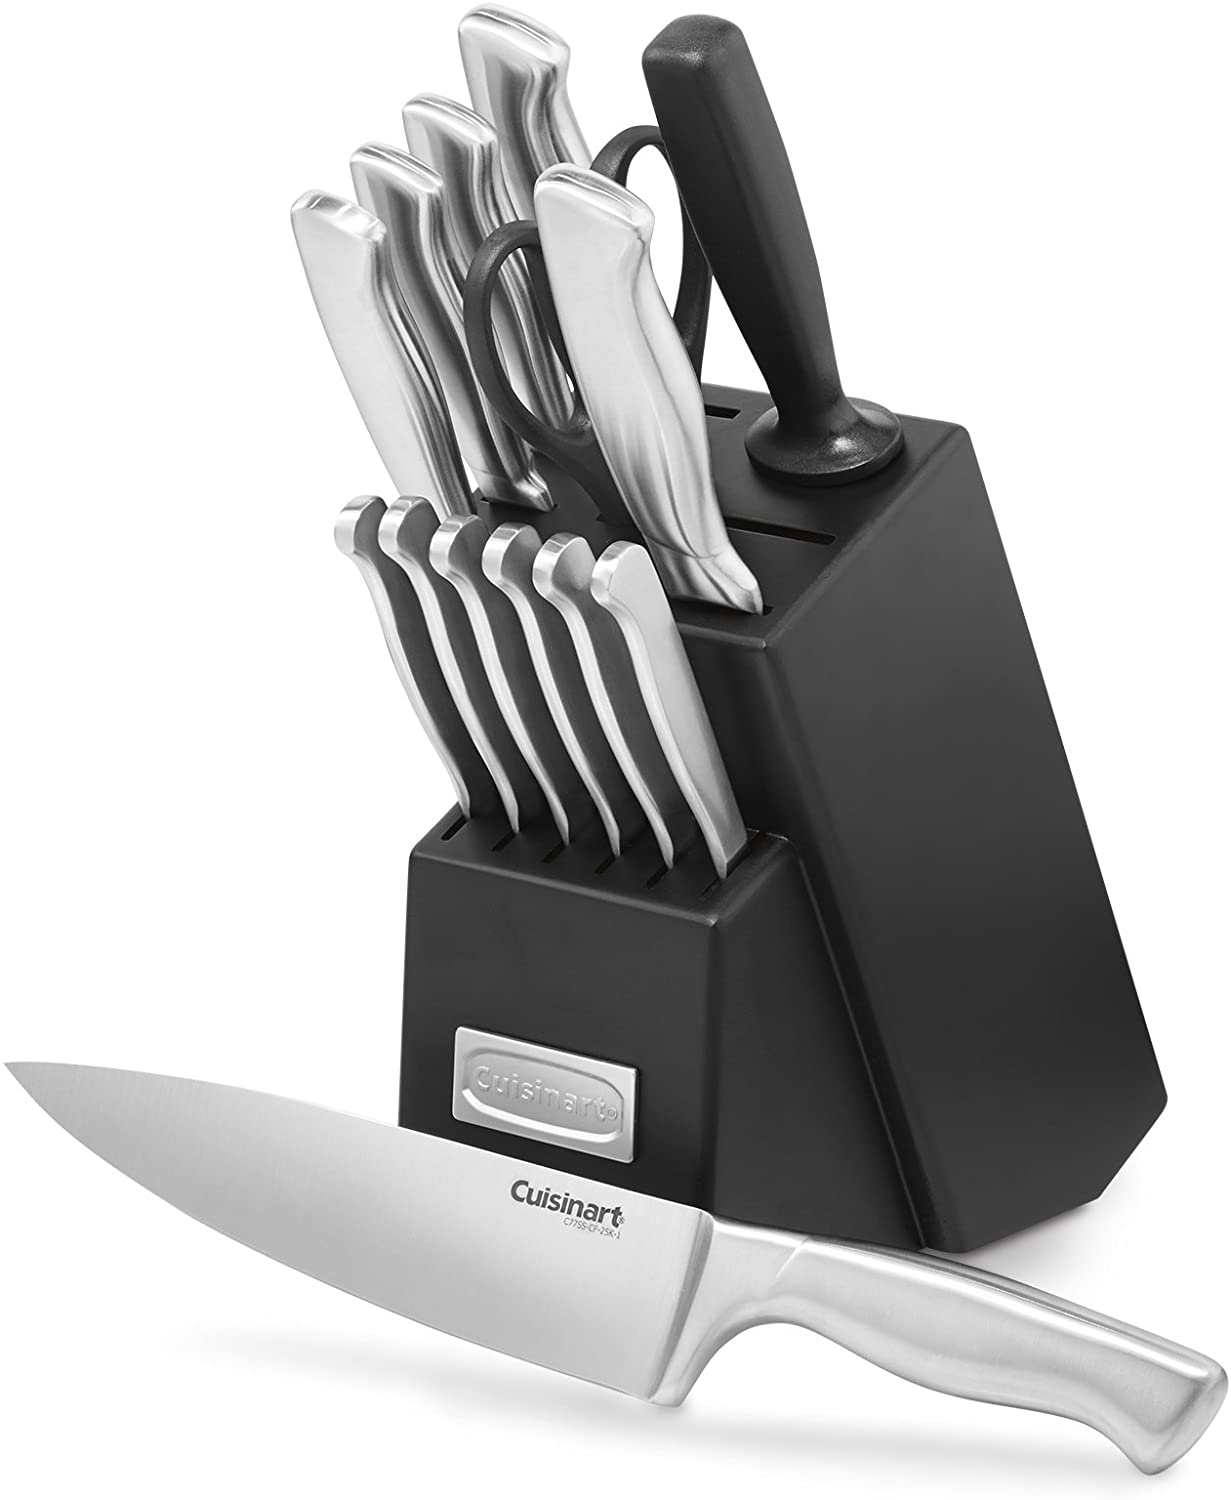 cuisinart hollow handle knife set